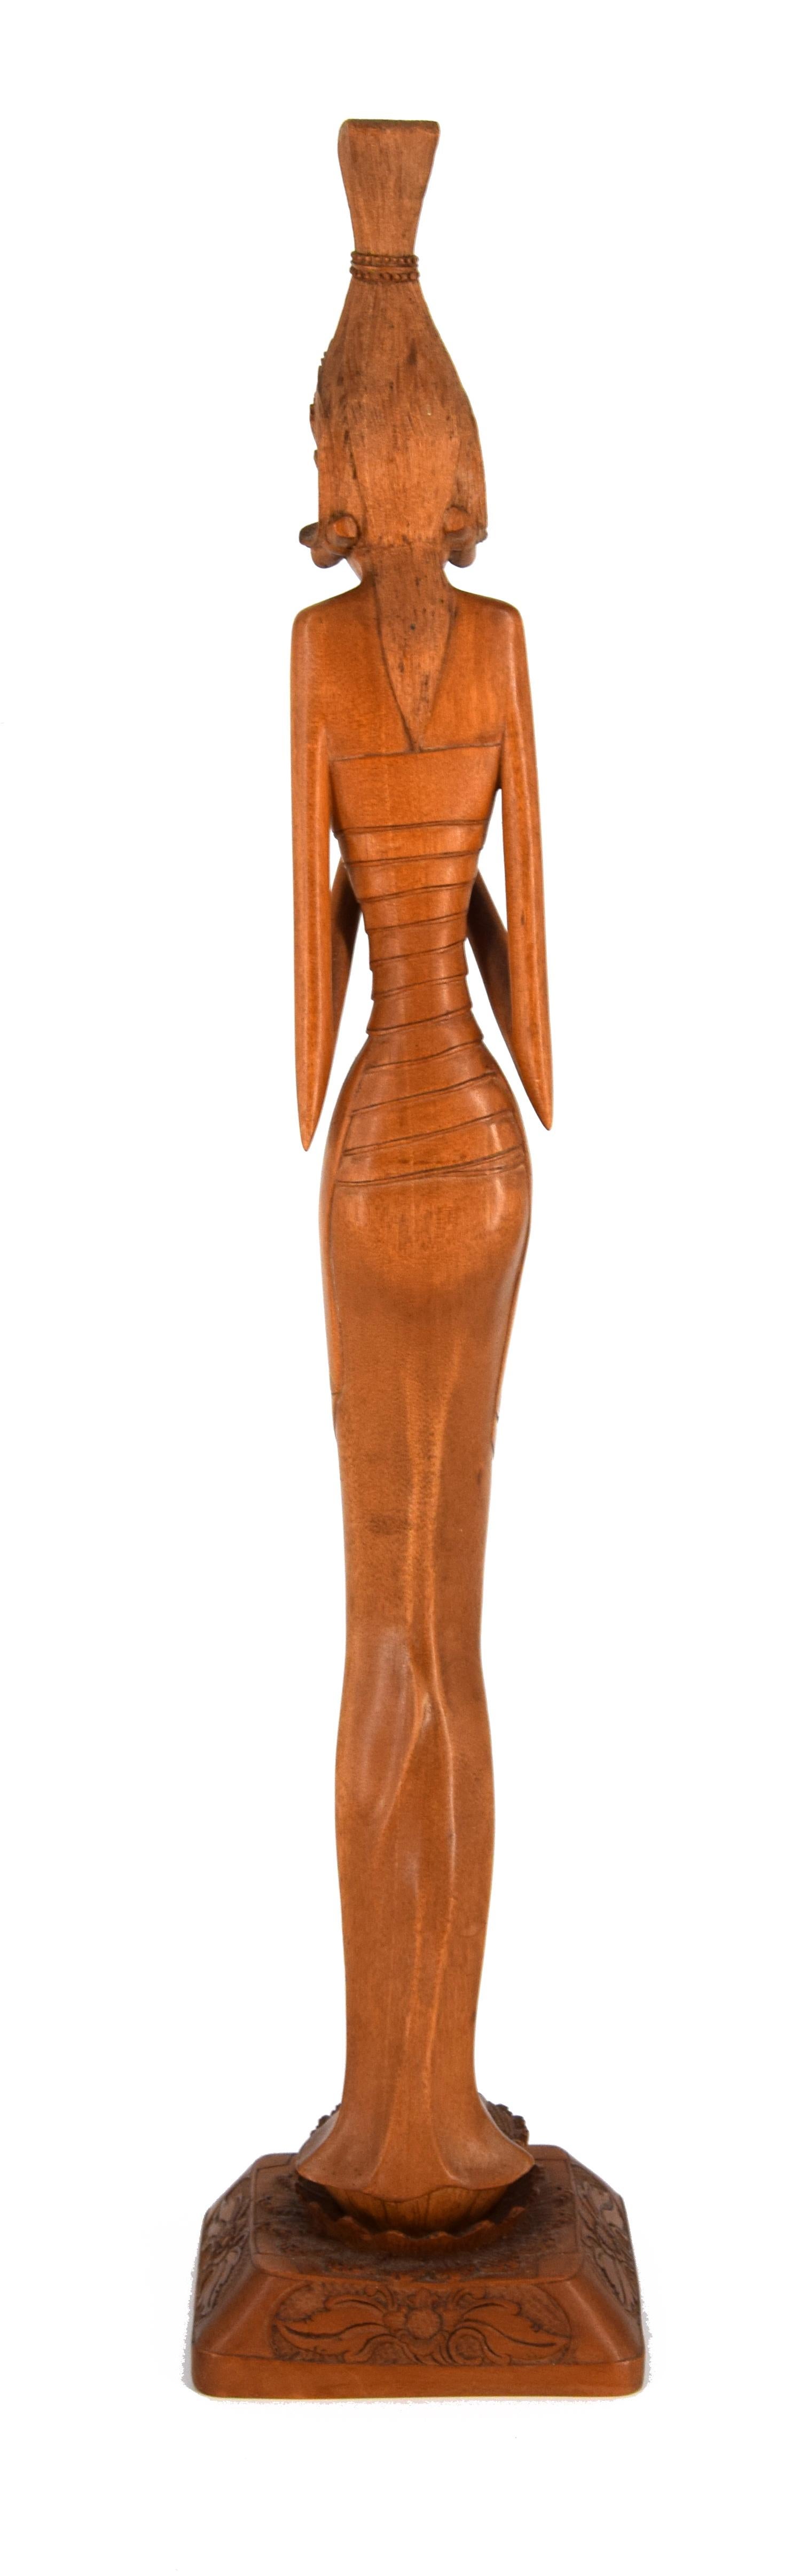 Modern Wooden Sculpture of Woman from Bali